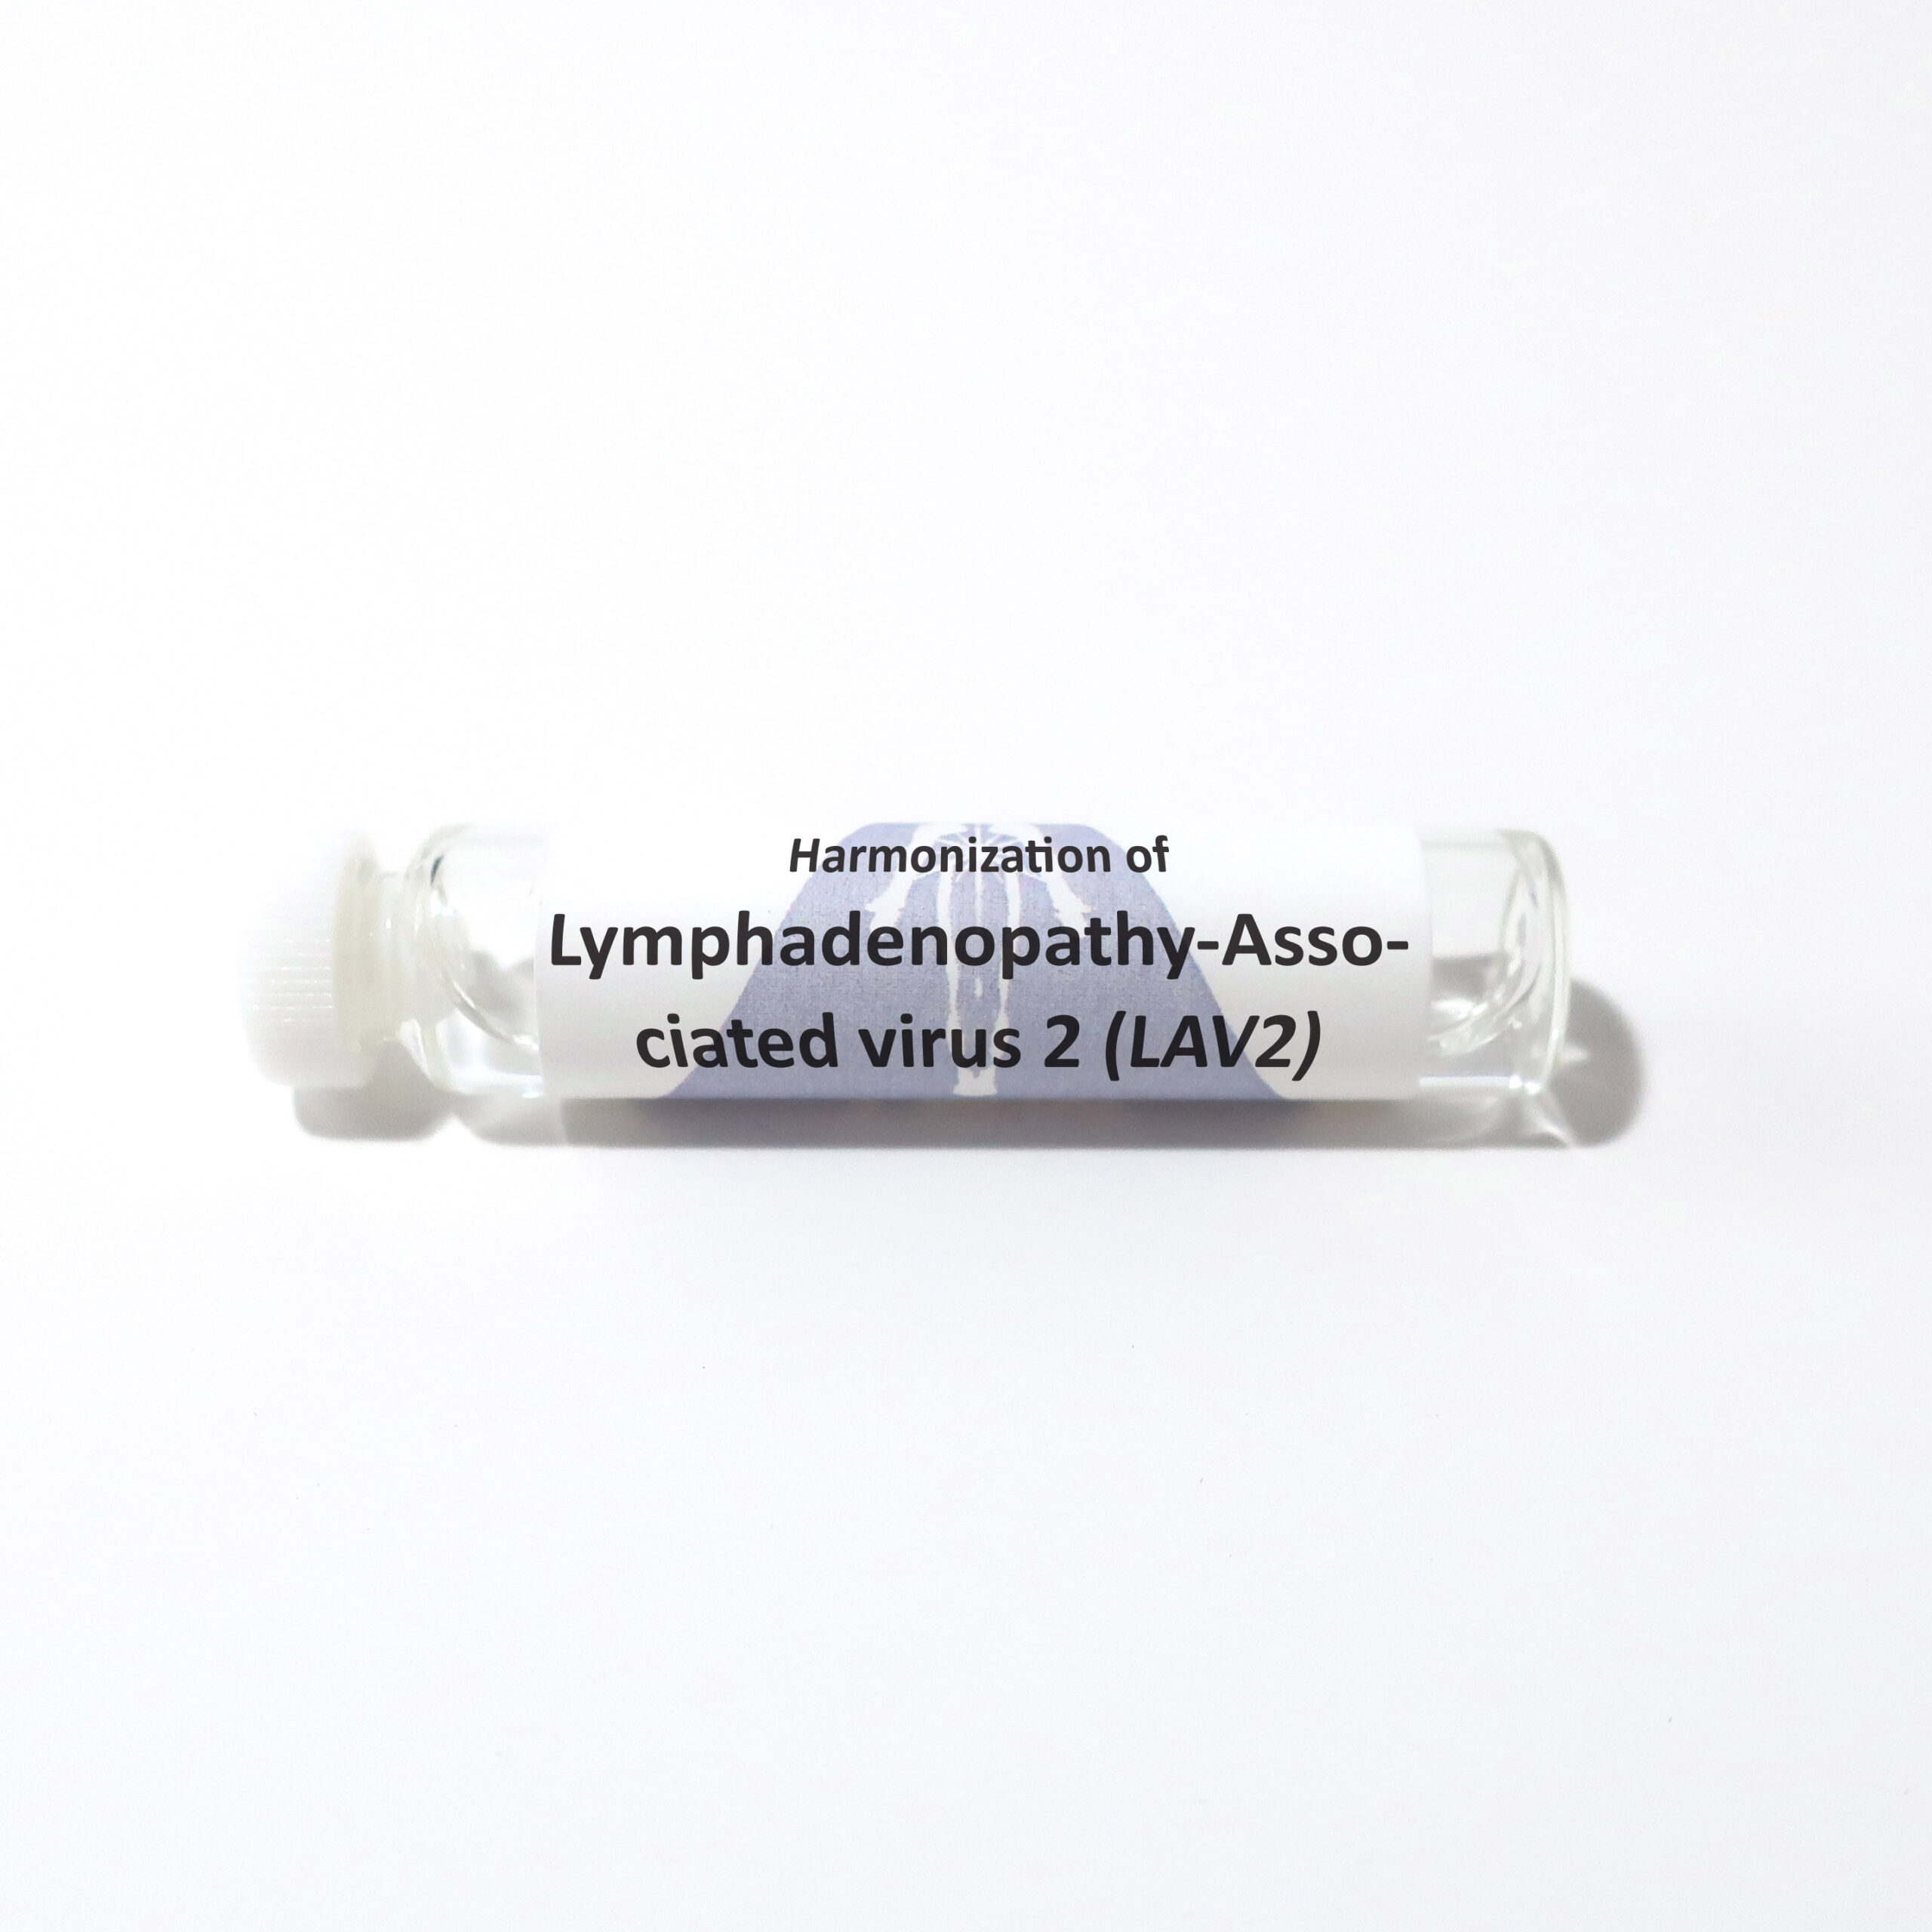 Lymphadenopathy-associated virus 2 (LAV2)